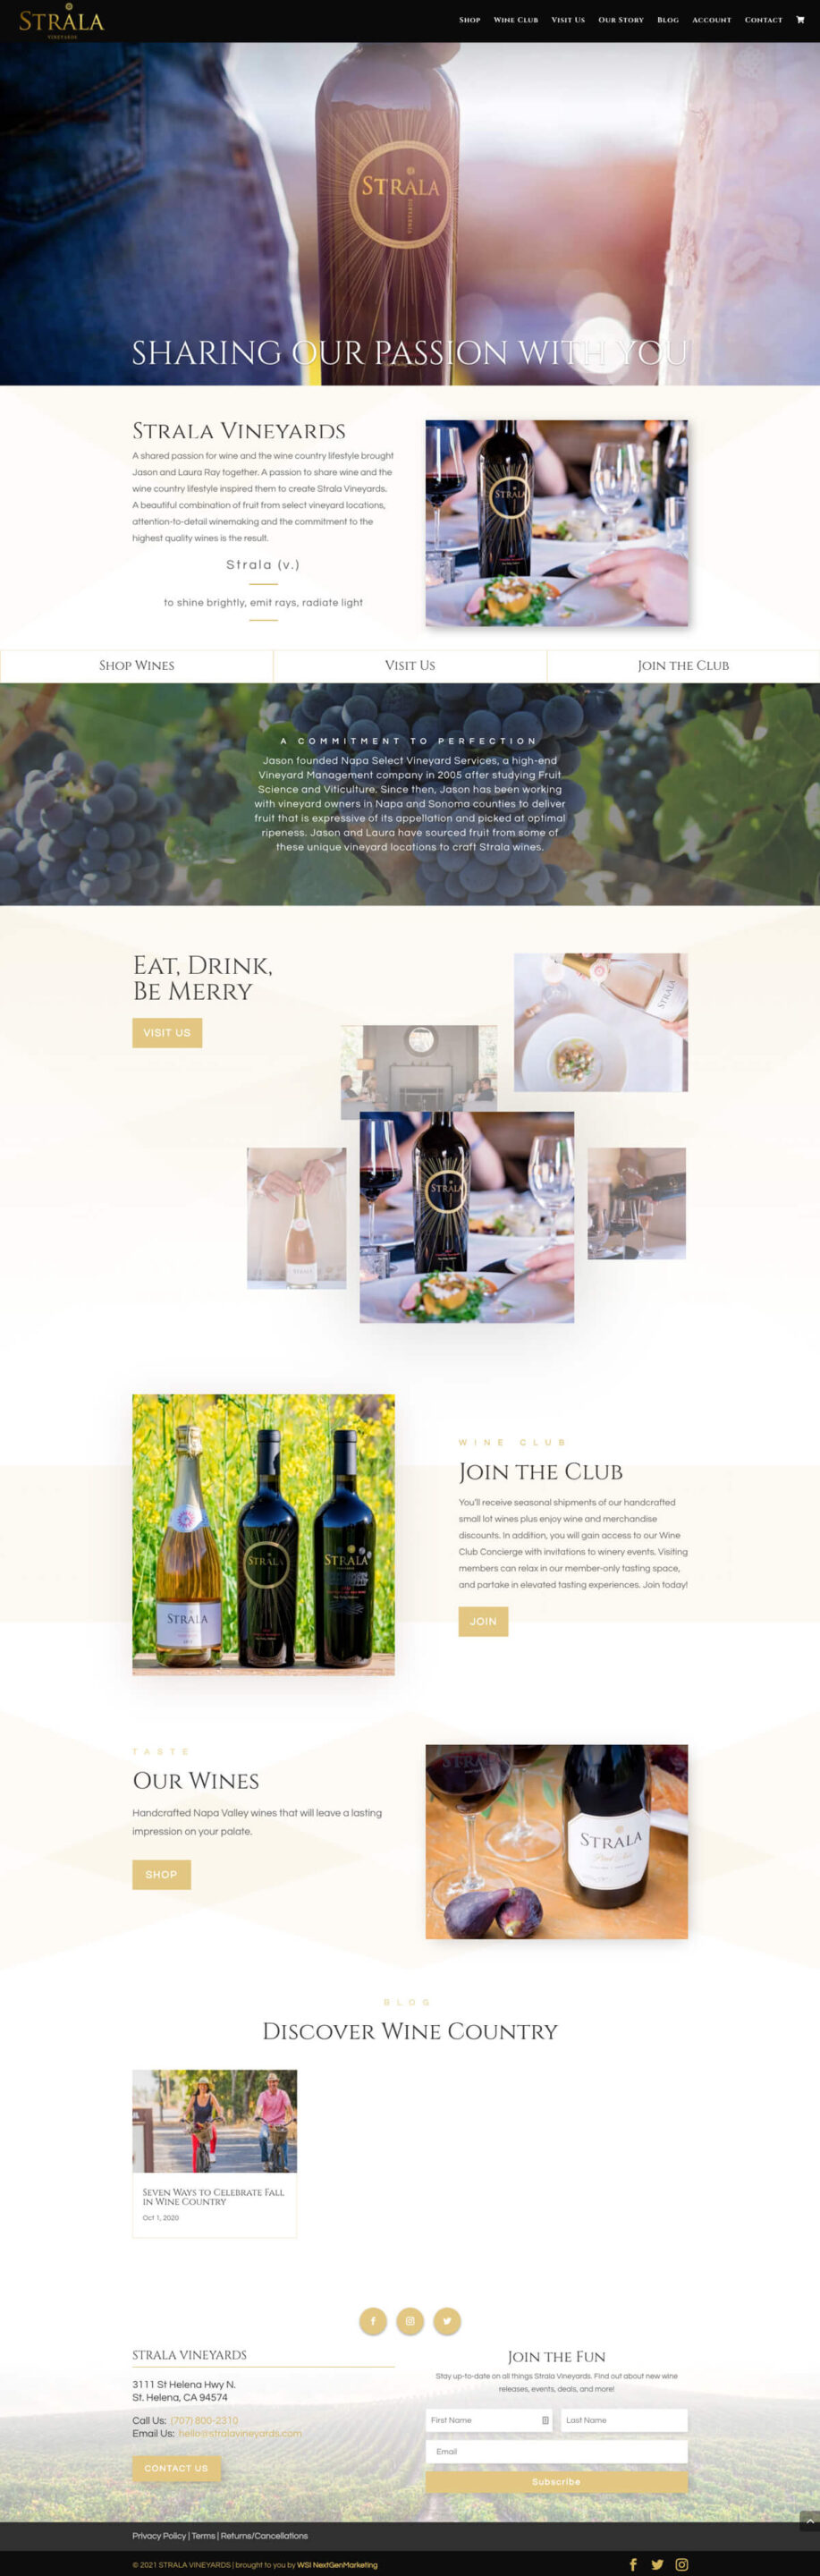 strala-vineyards-home-winery-website